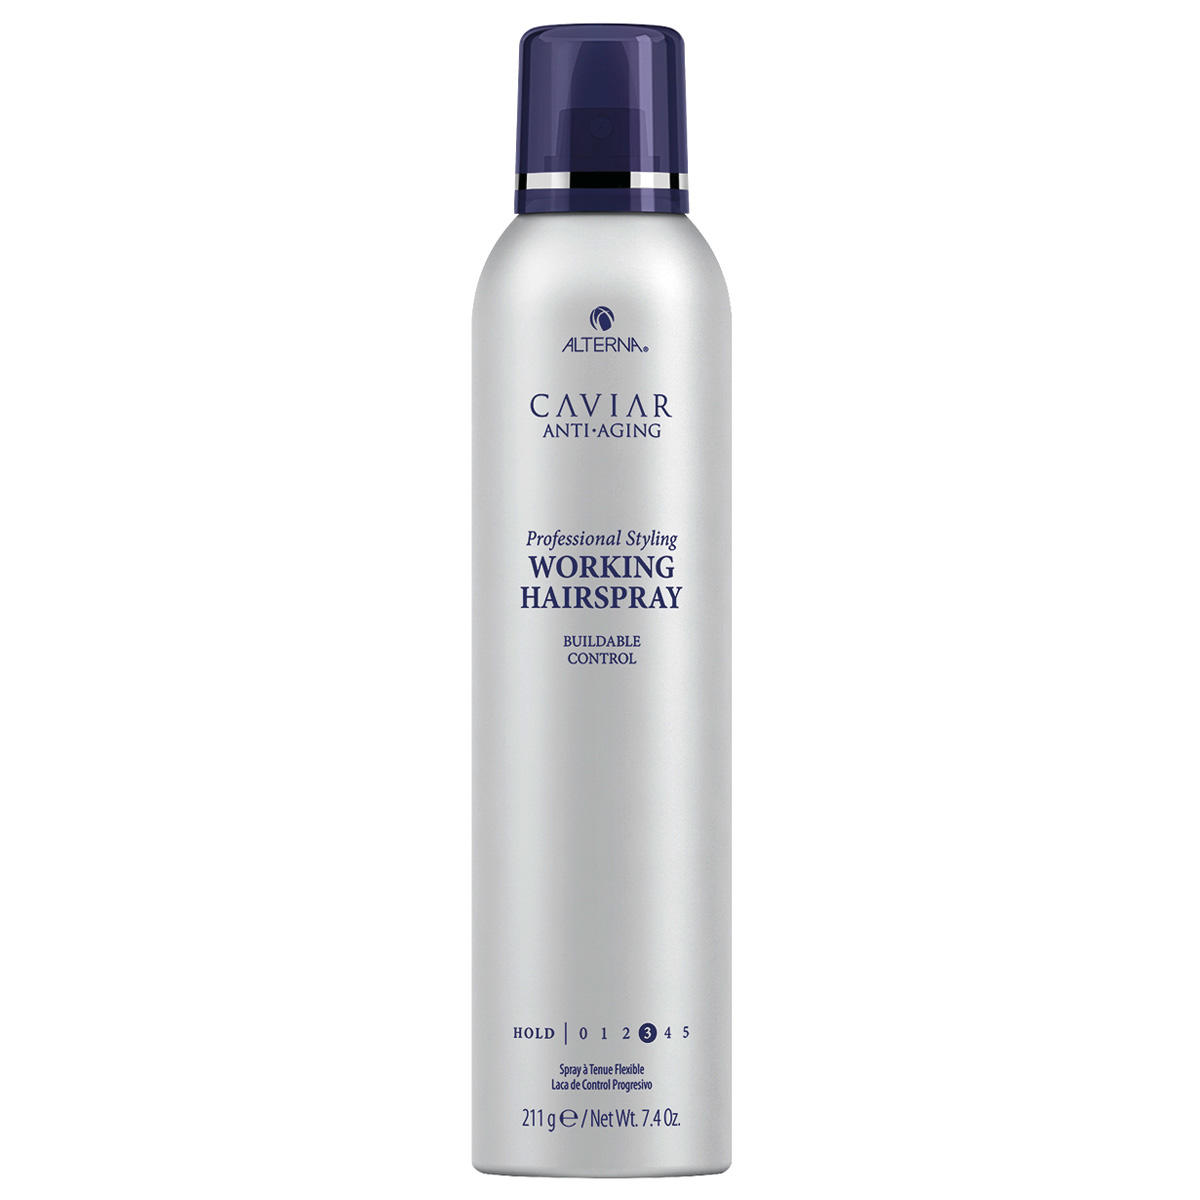 Alterna Caviar Anti-Aging Professional Styling Working Hairspray mittlerer Halt 211 g - 1